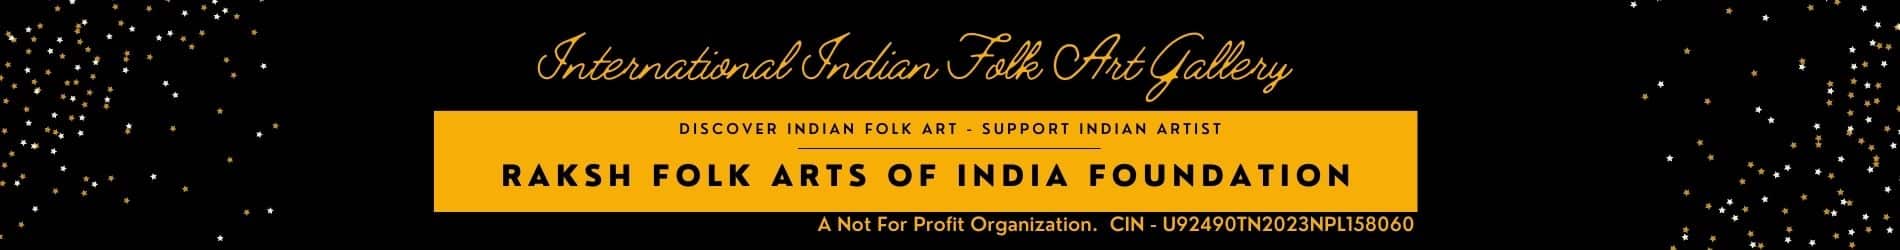 International Indian Folk Art Gallery is now Raksh Folk Arts of India